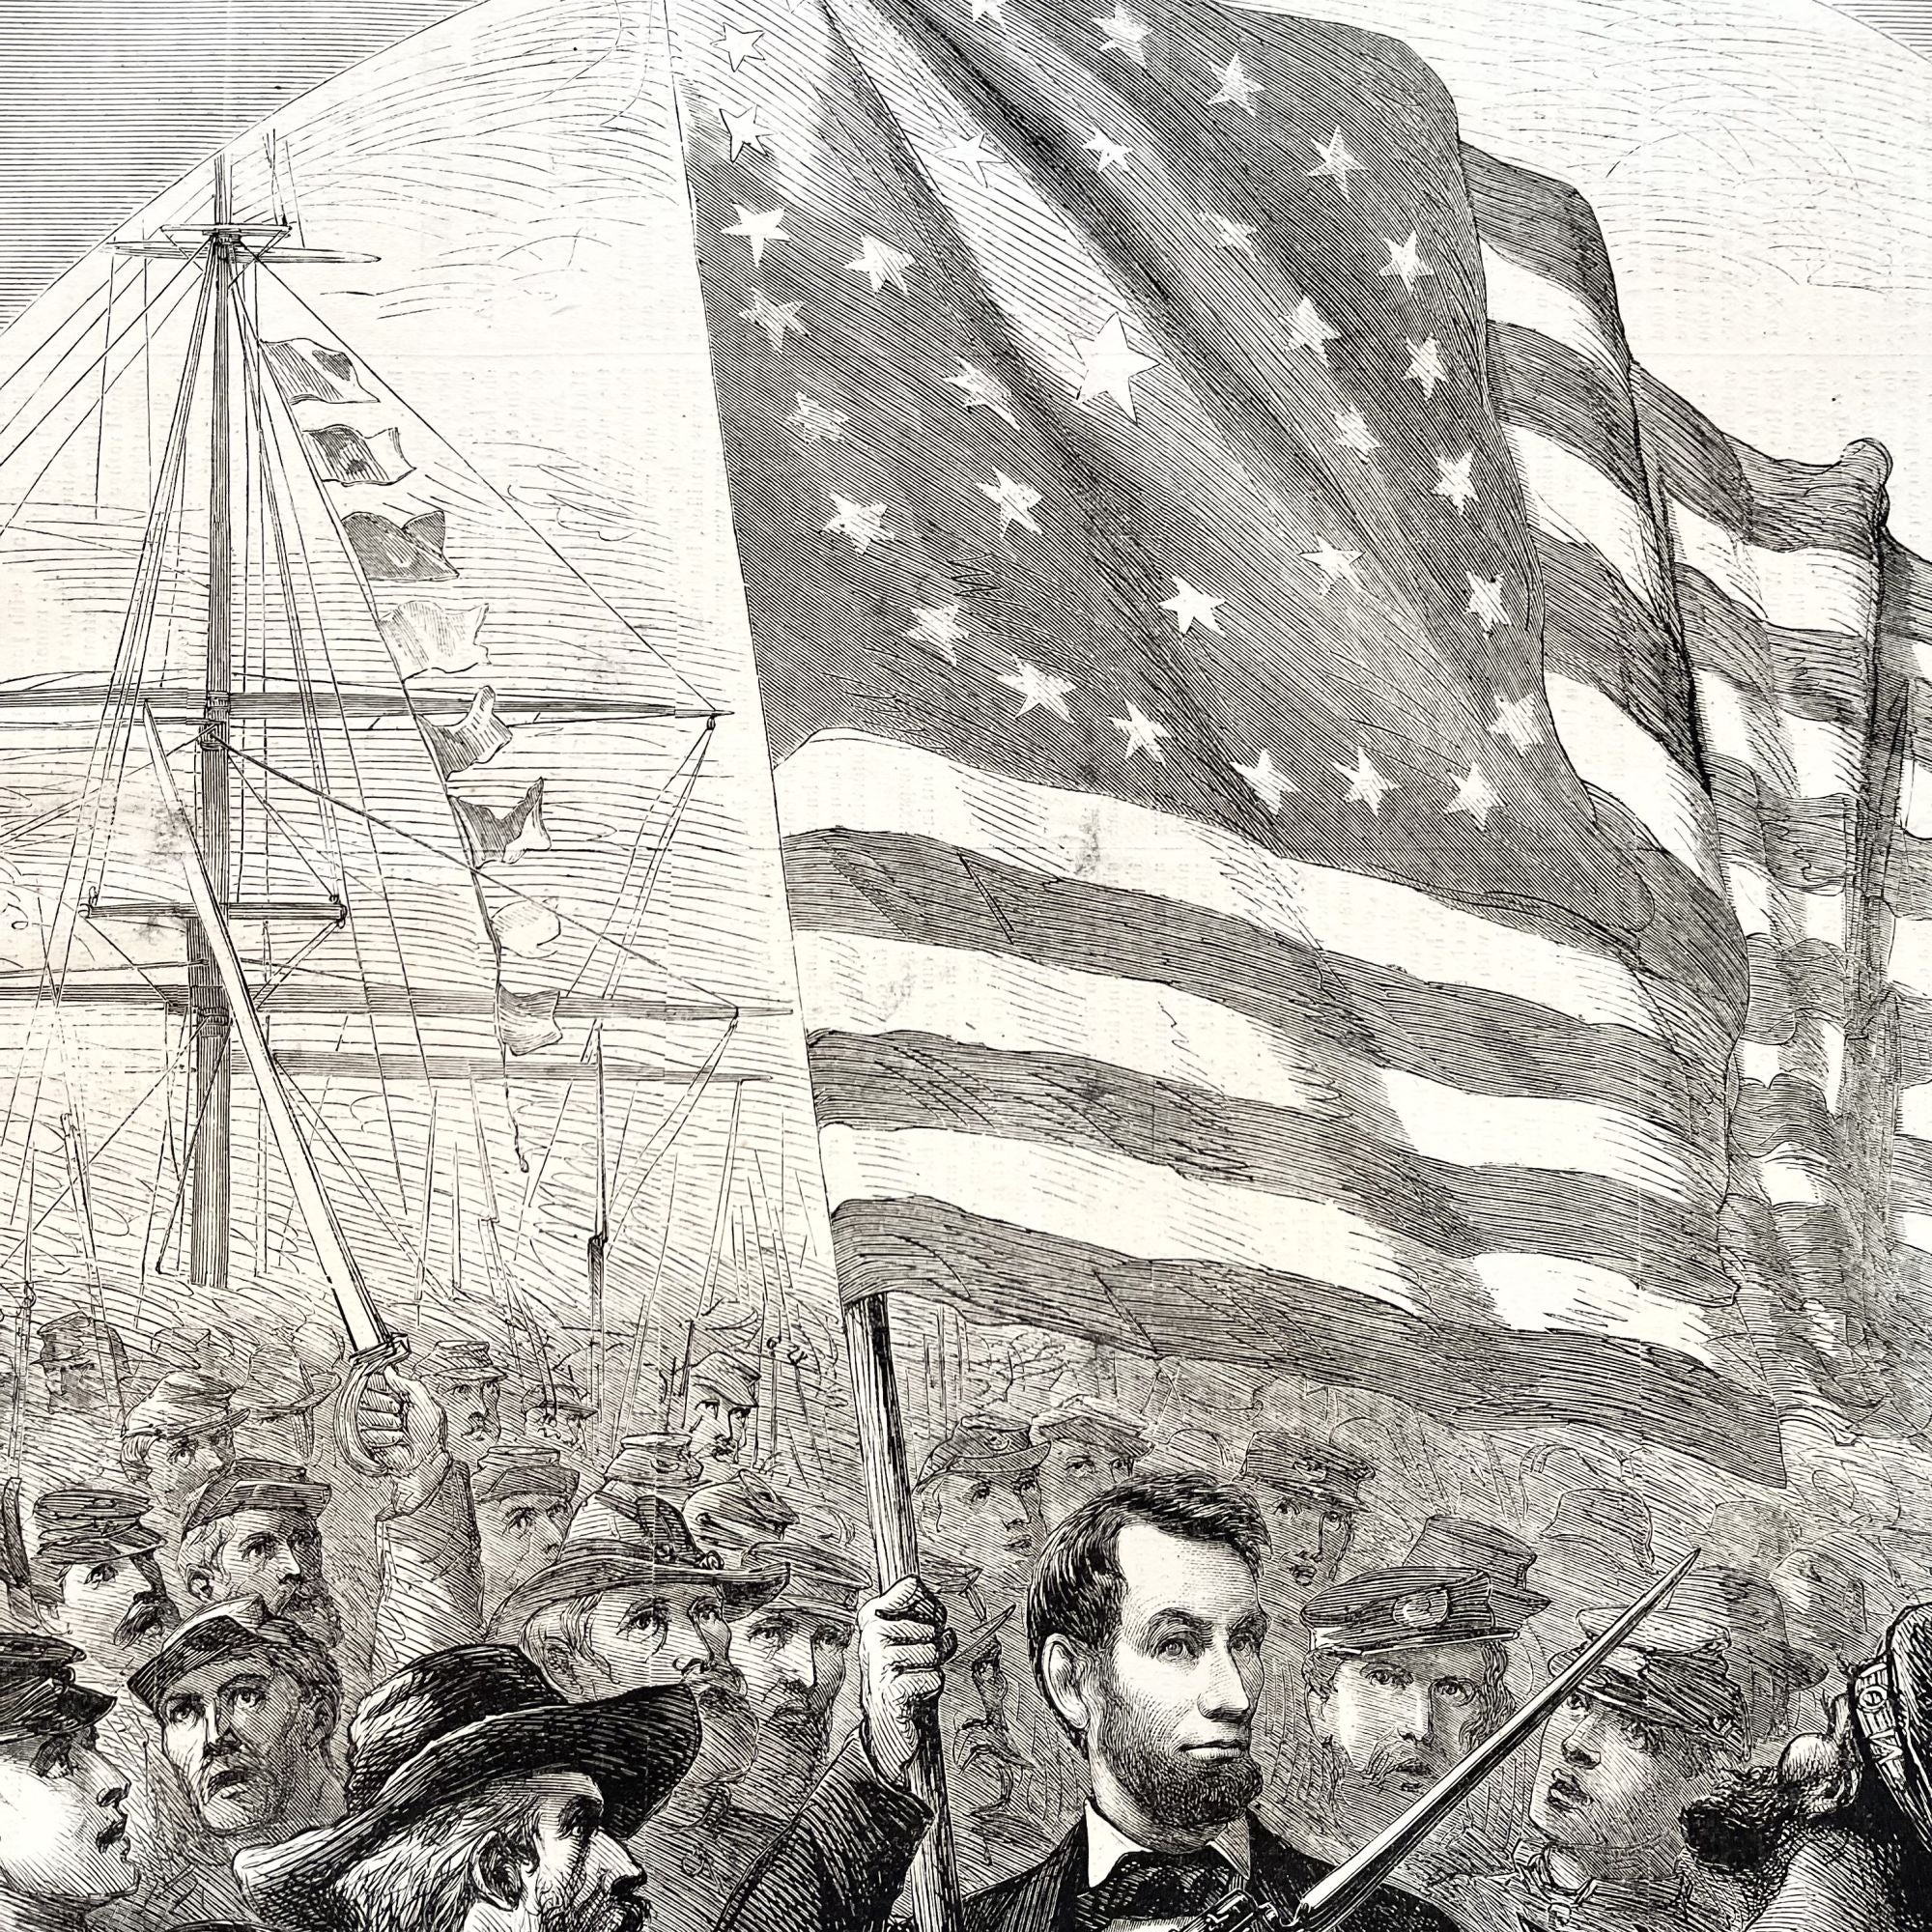 union civil war flag 1864